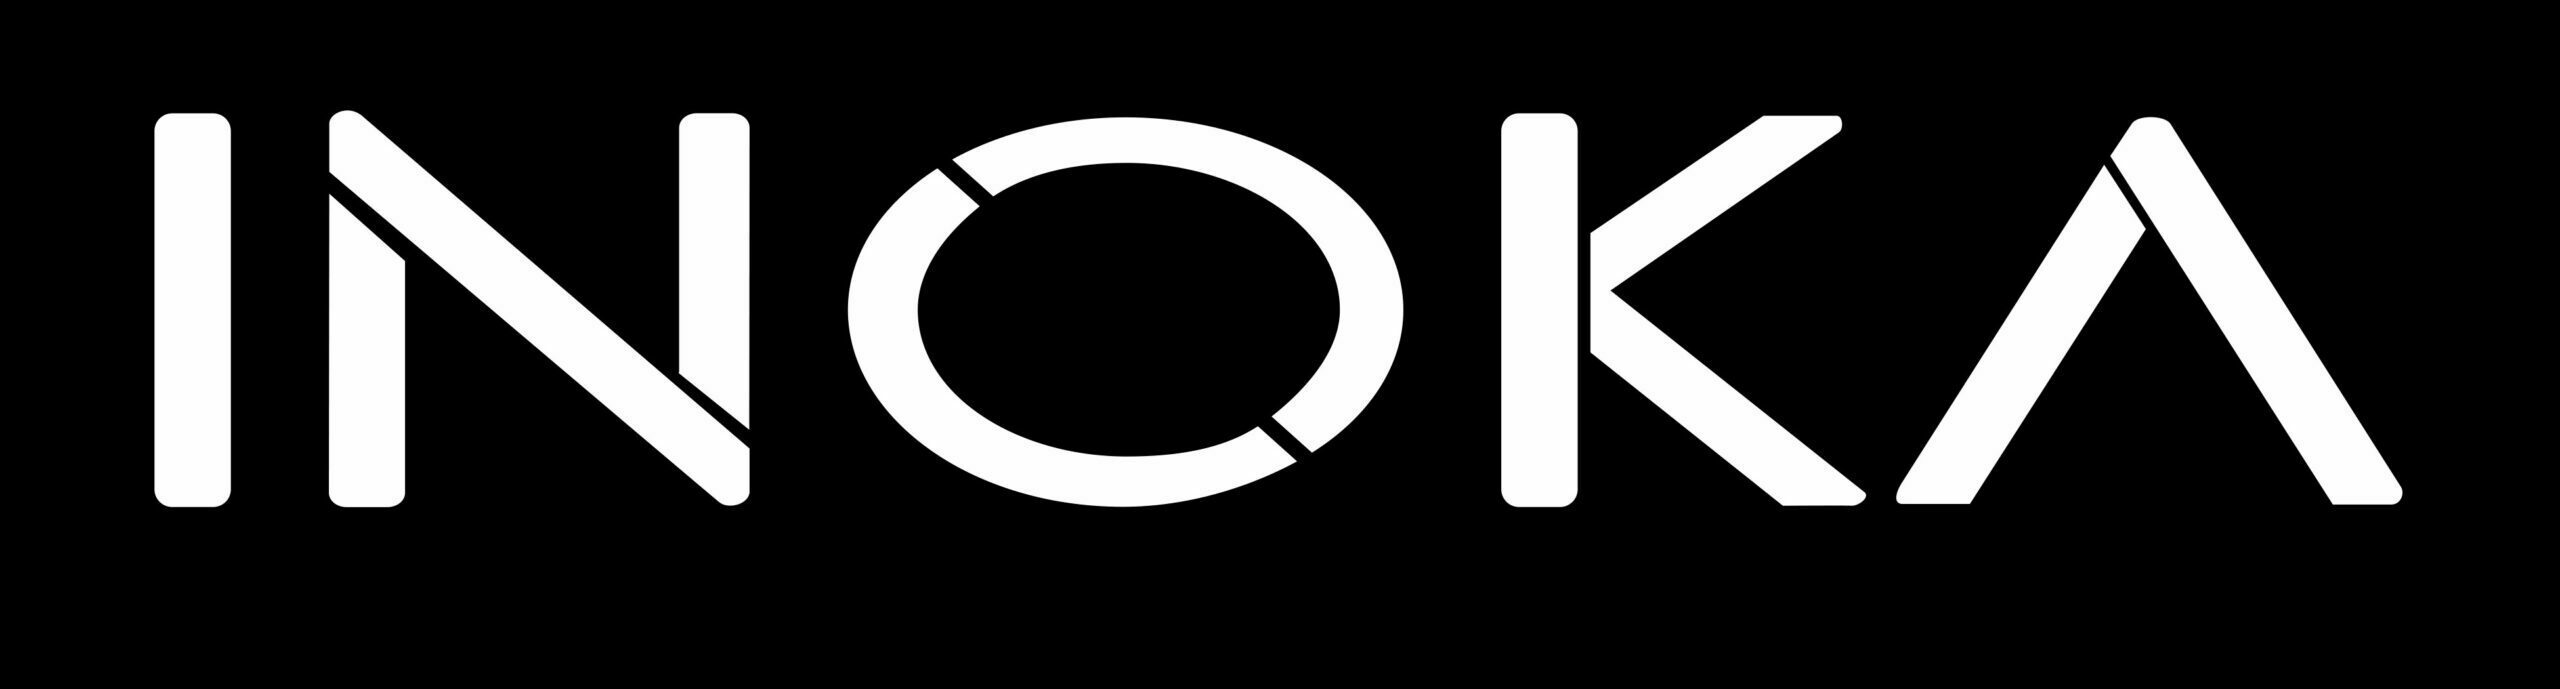 Logo Inoka negro